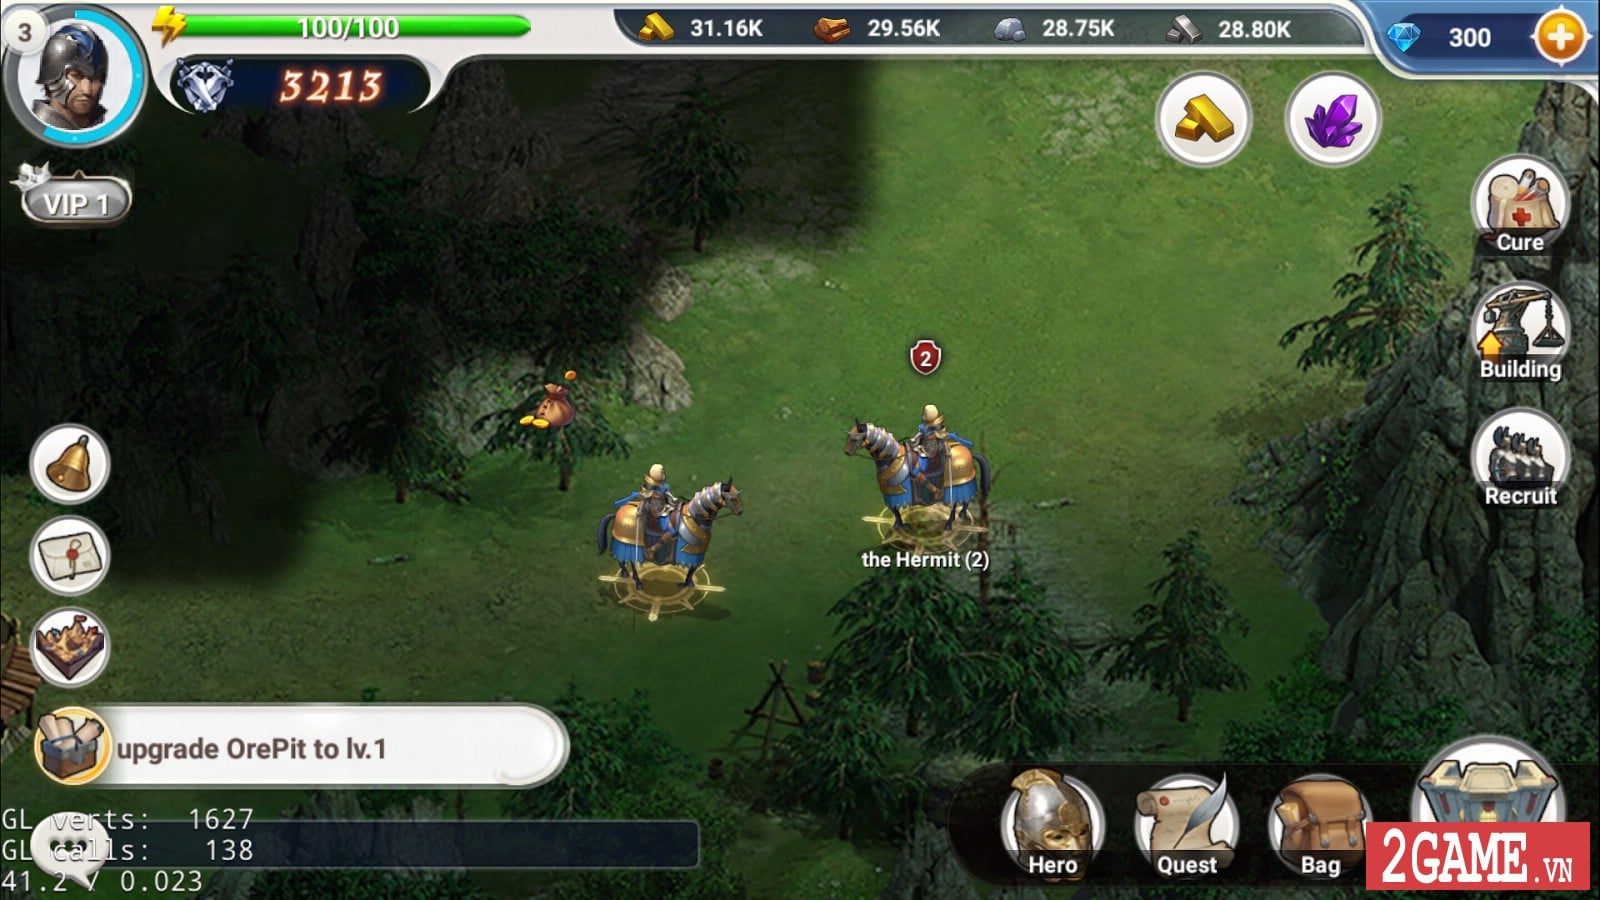 2game-Rival-Kings-mobile-2.jpg (1600×900)